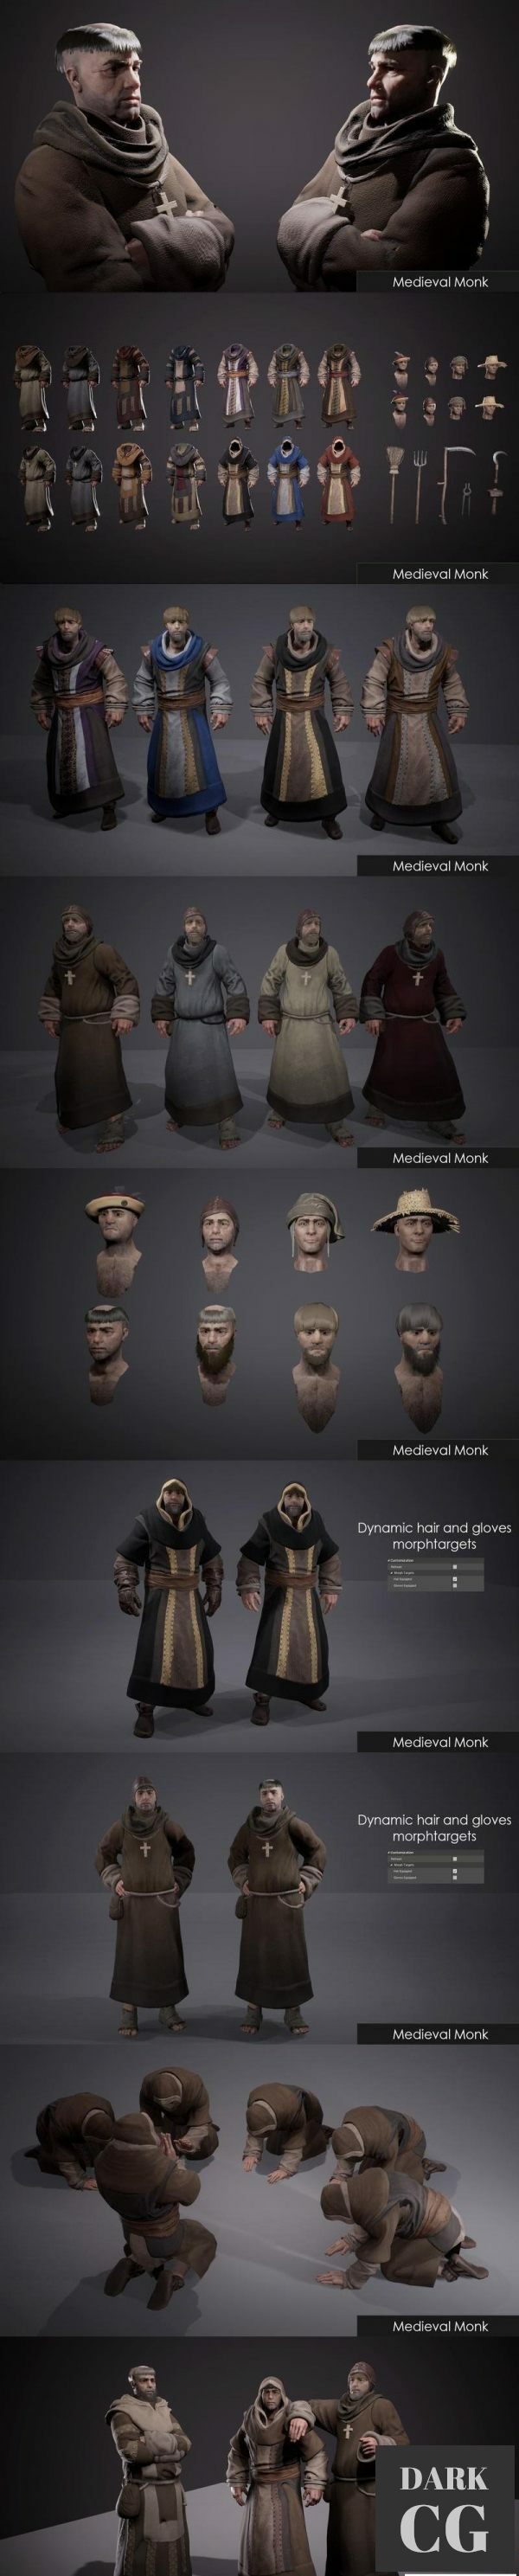 Unreal Engine Marketplace Medieval Monks